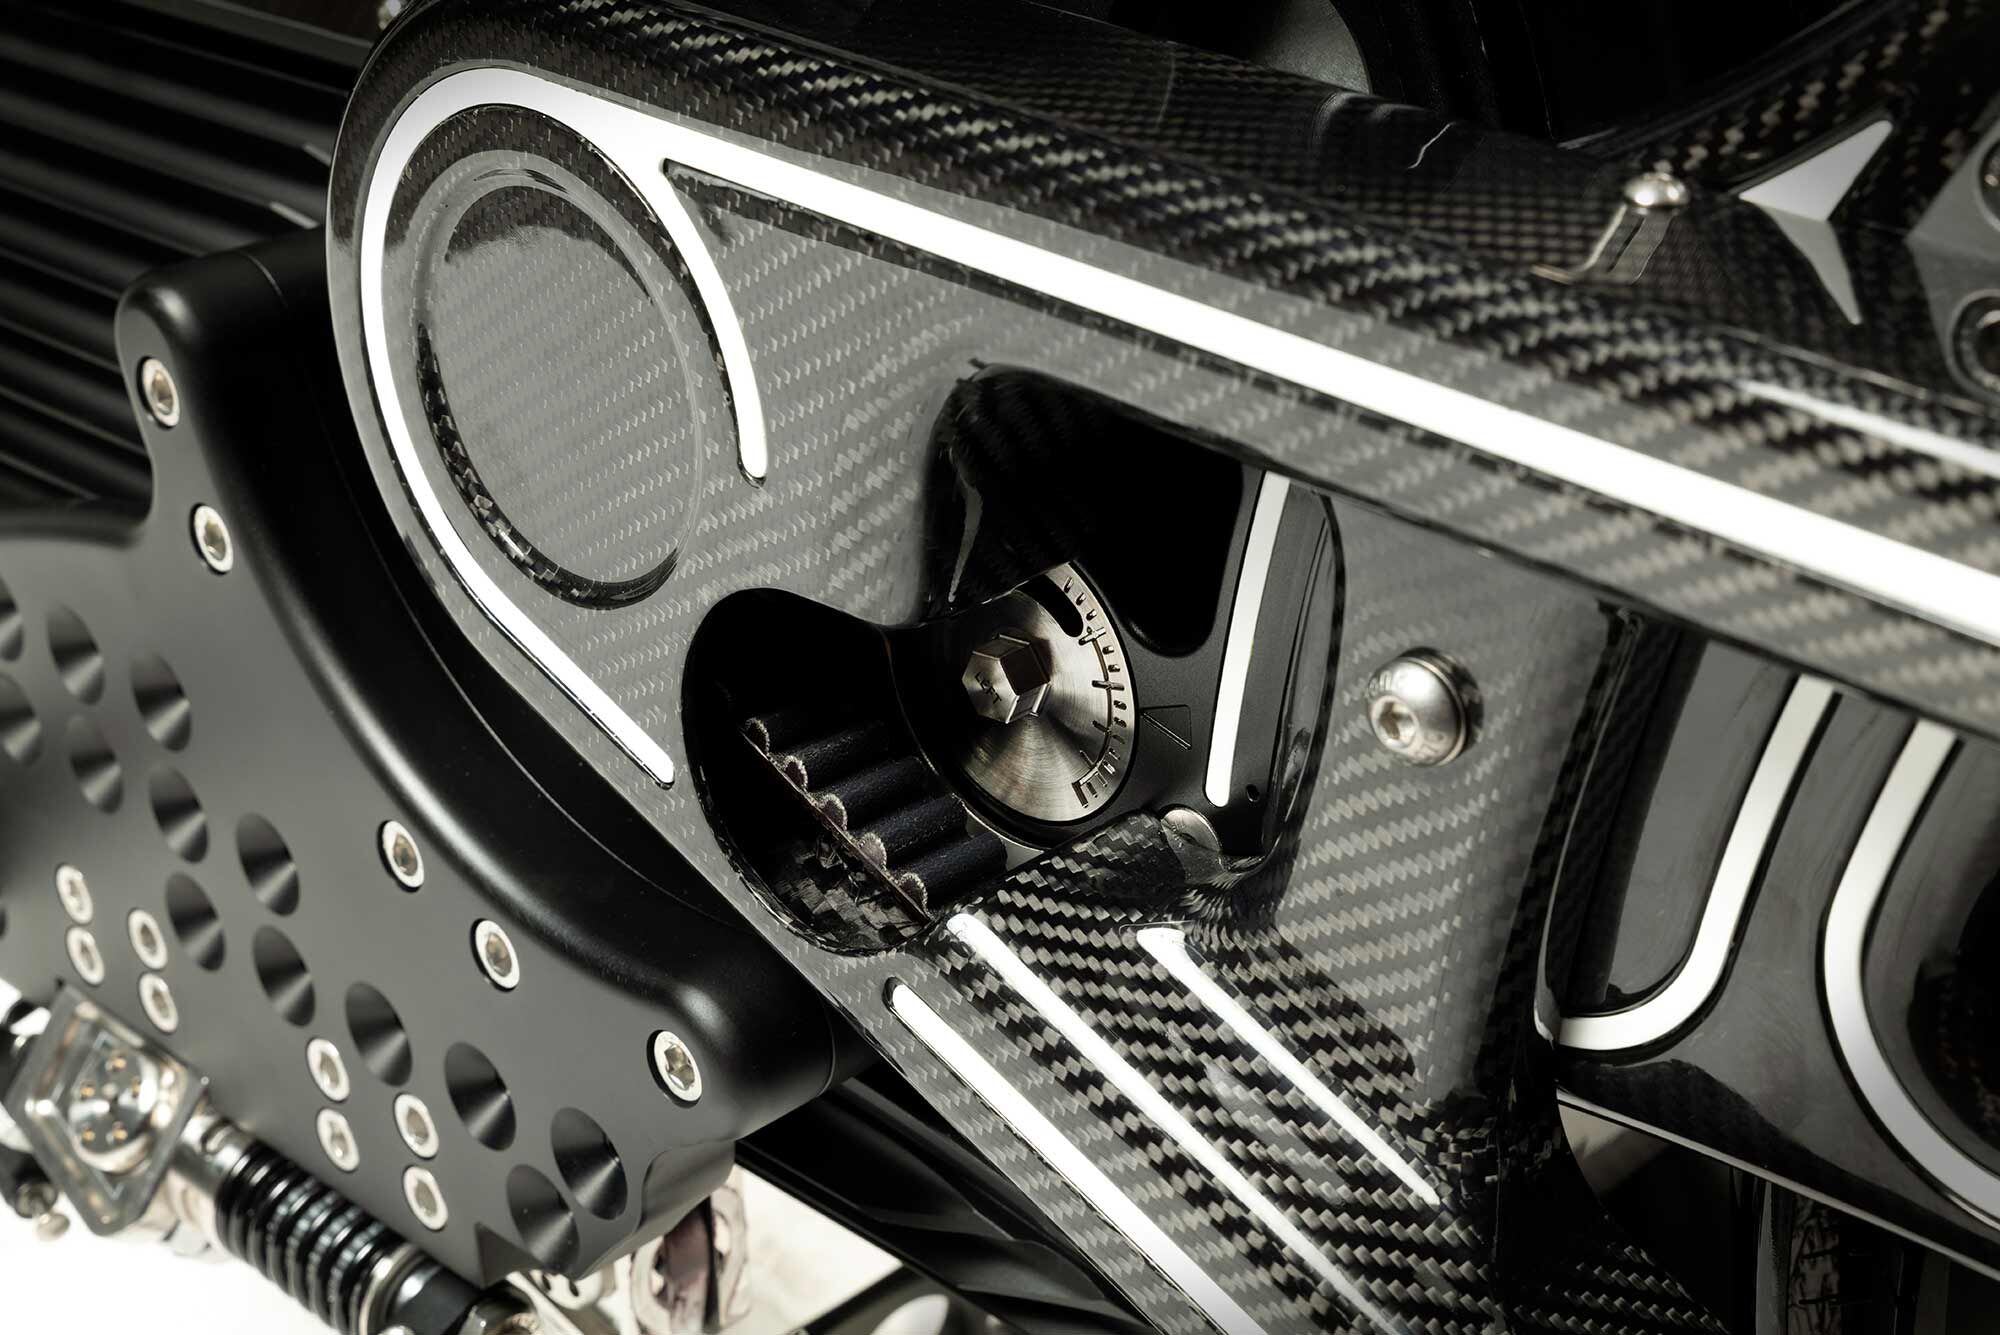 High-end materials make up The 1. Even the belt guard is carbon fiber.